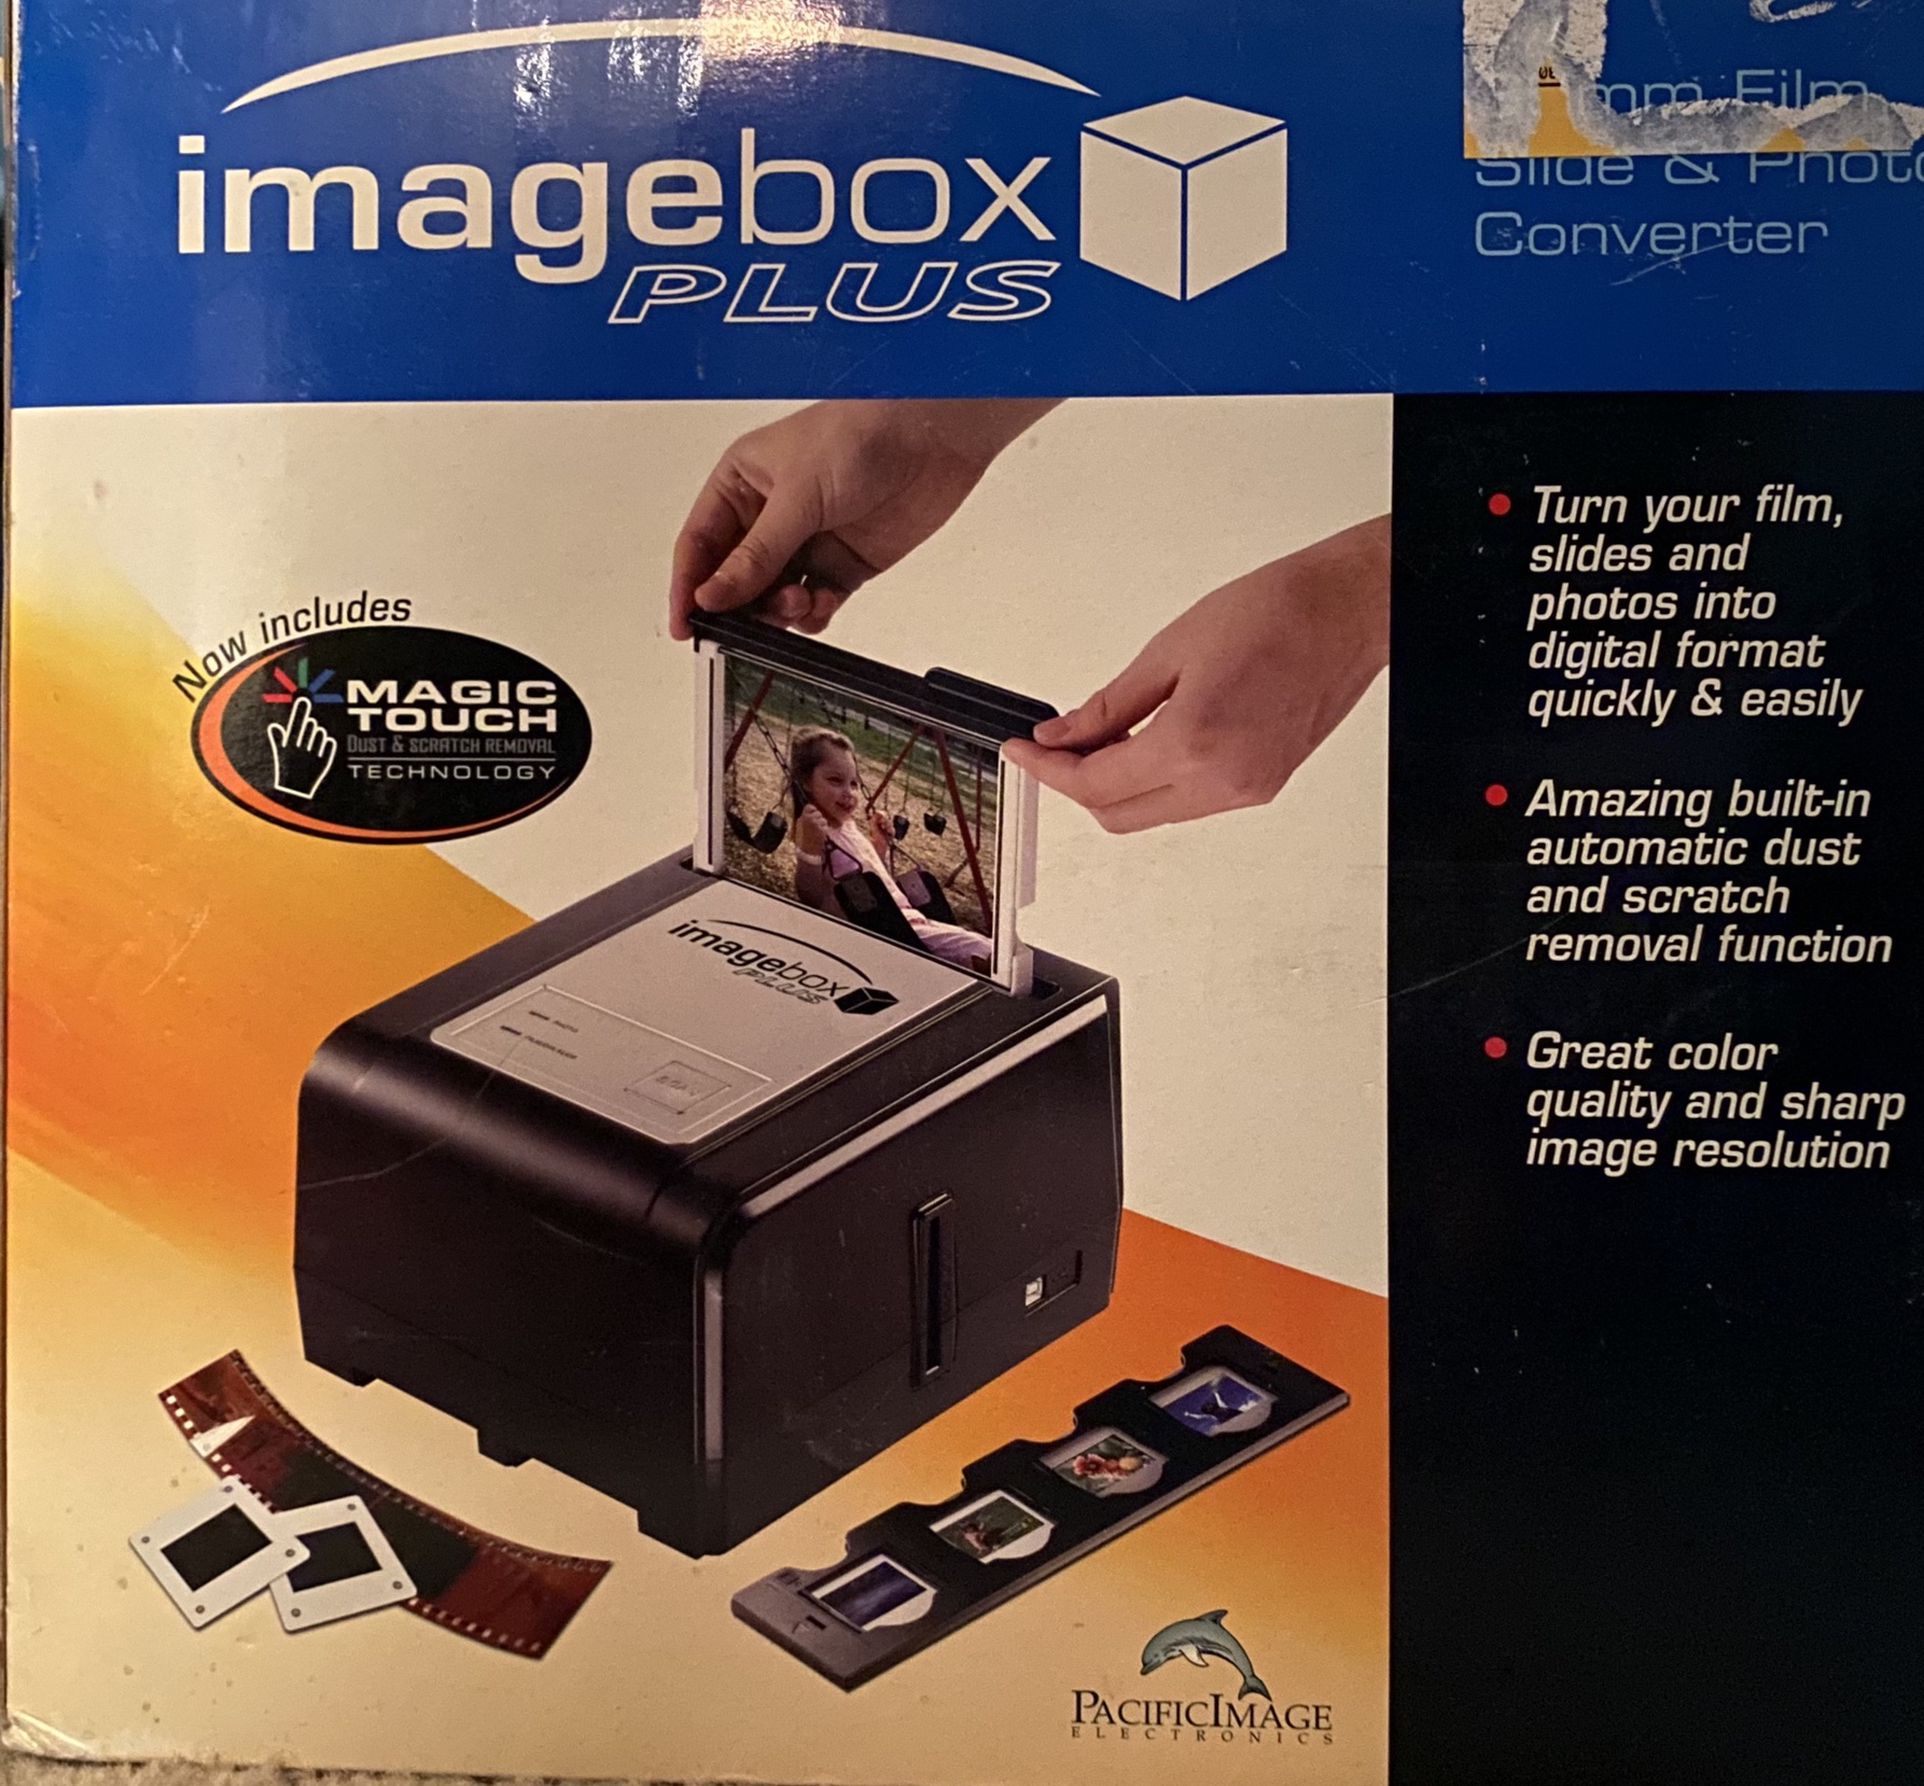 ImageBox plus 35mm Film, Slide & Photo Comverter